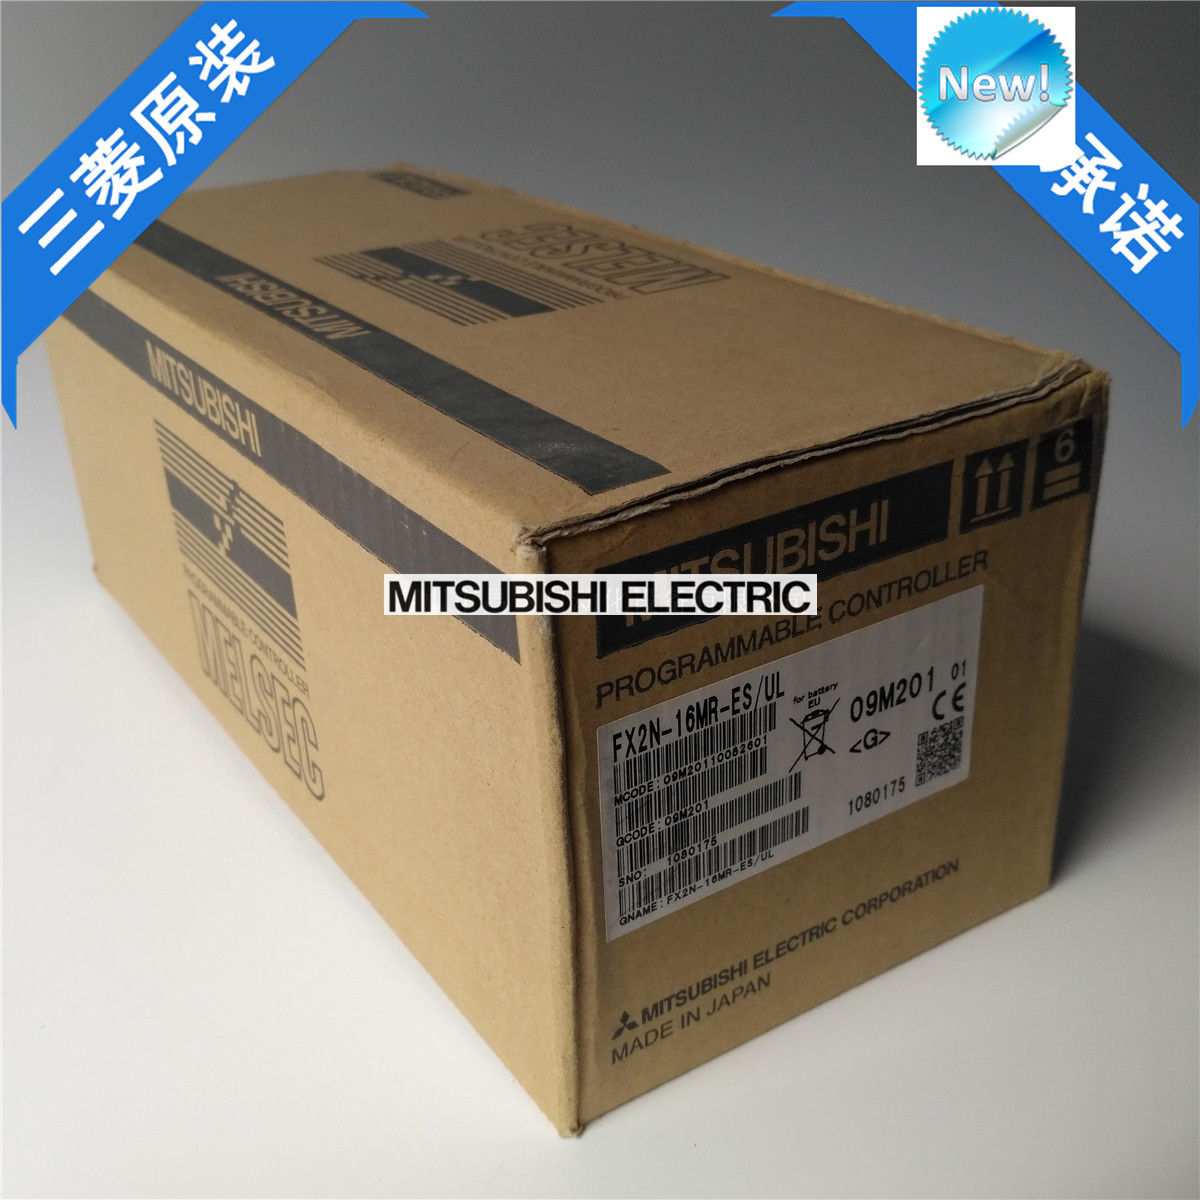 Original New Mitsubishi PLC FX2N-16MR-ES/UL In Box FX2N16MRESUL